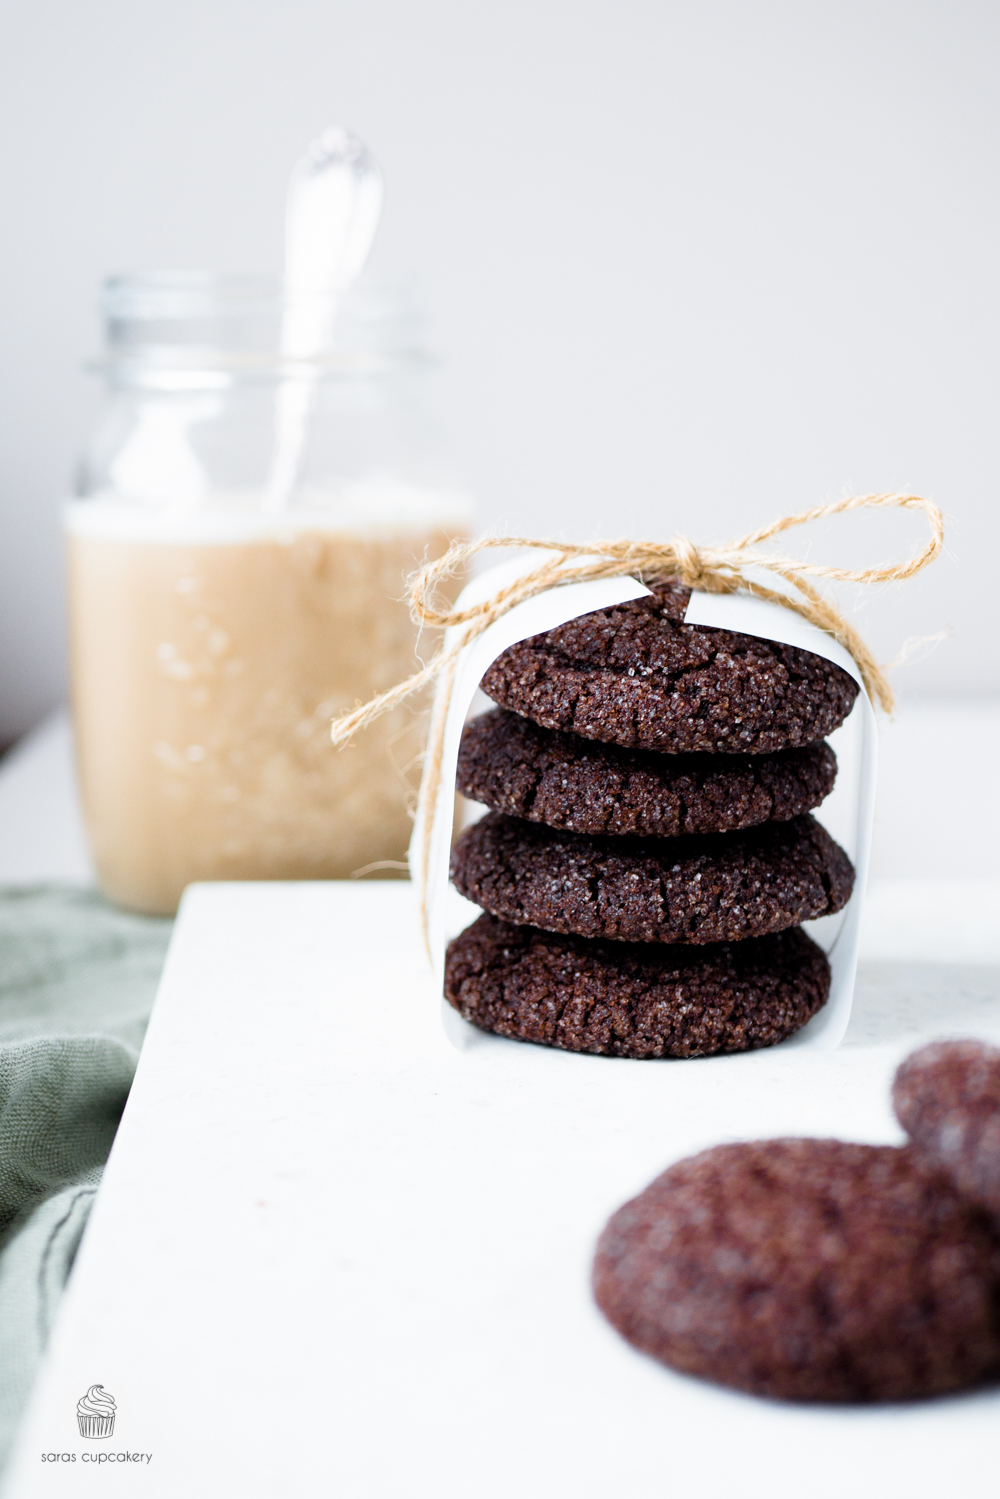 Rezept: Schokoladencookies mit Zuckerkruste - Saras Cupcakery